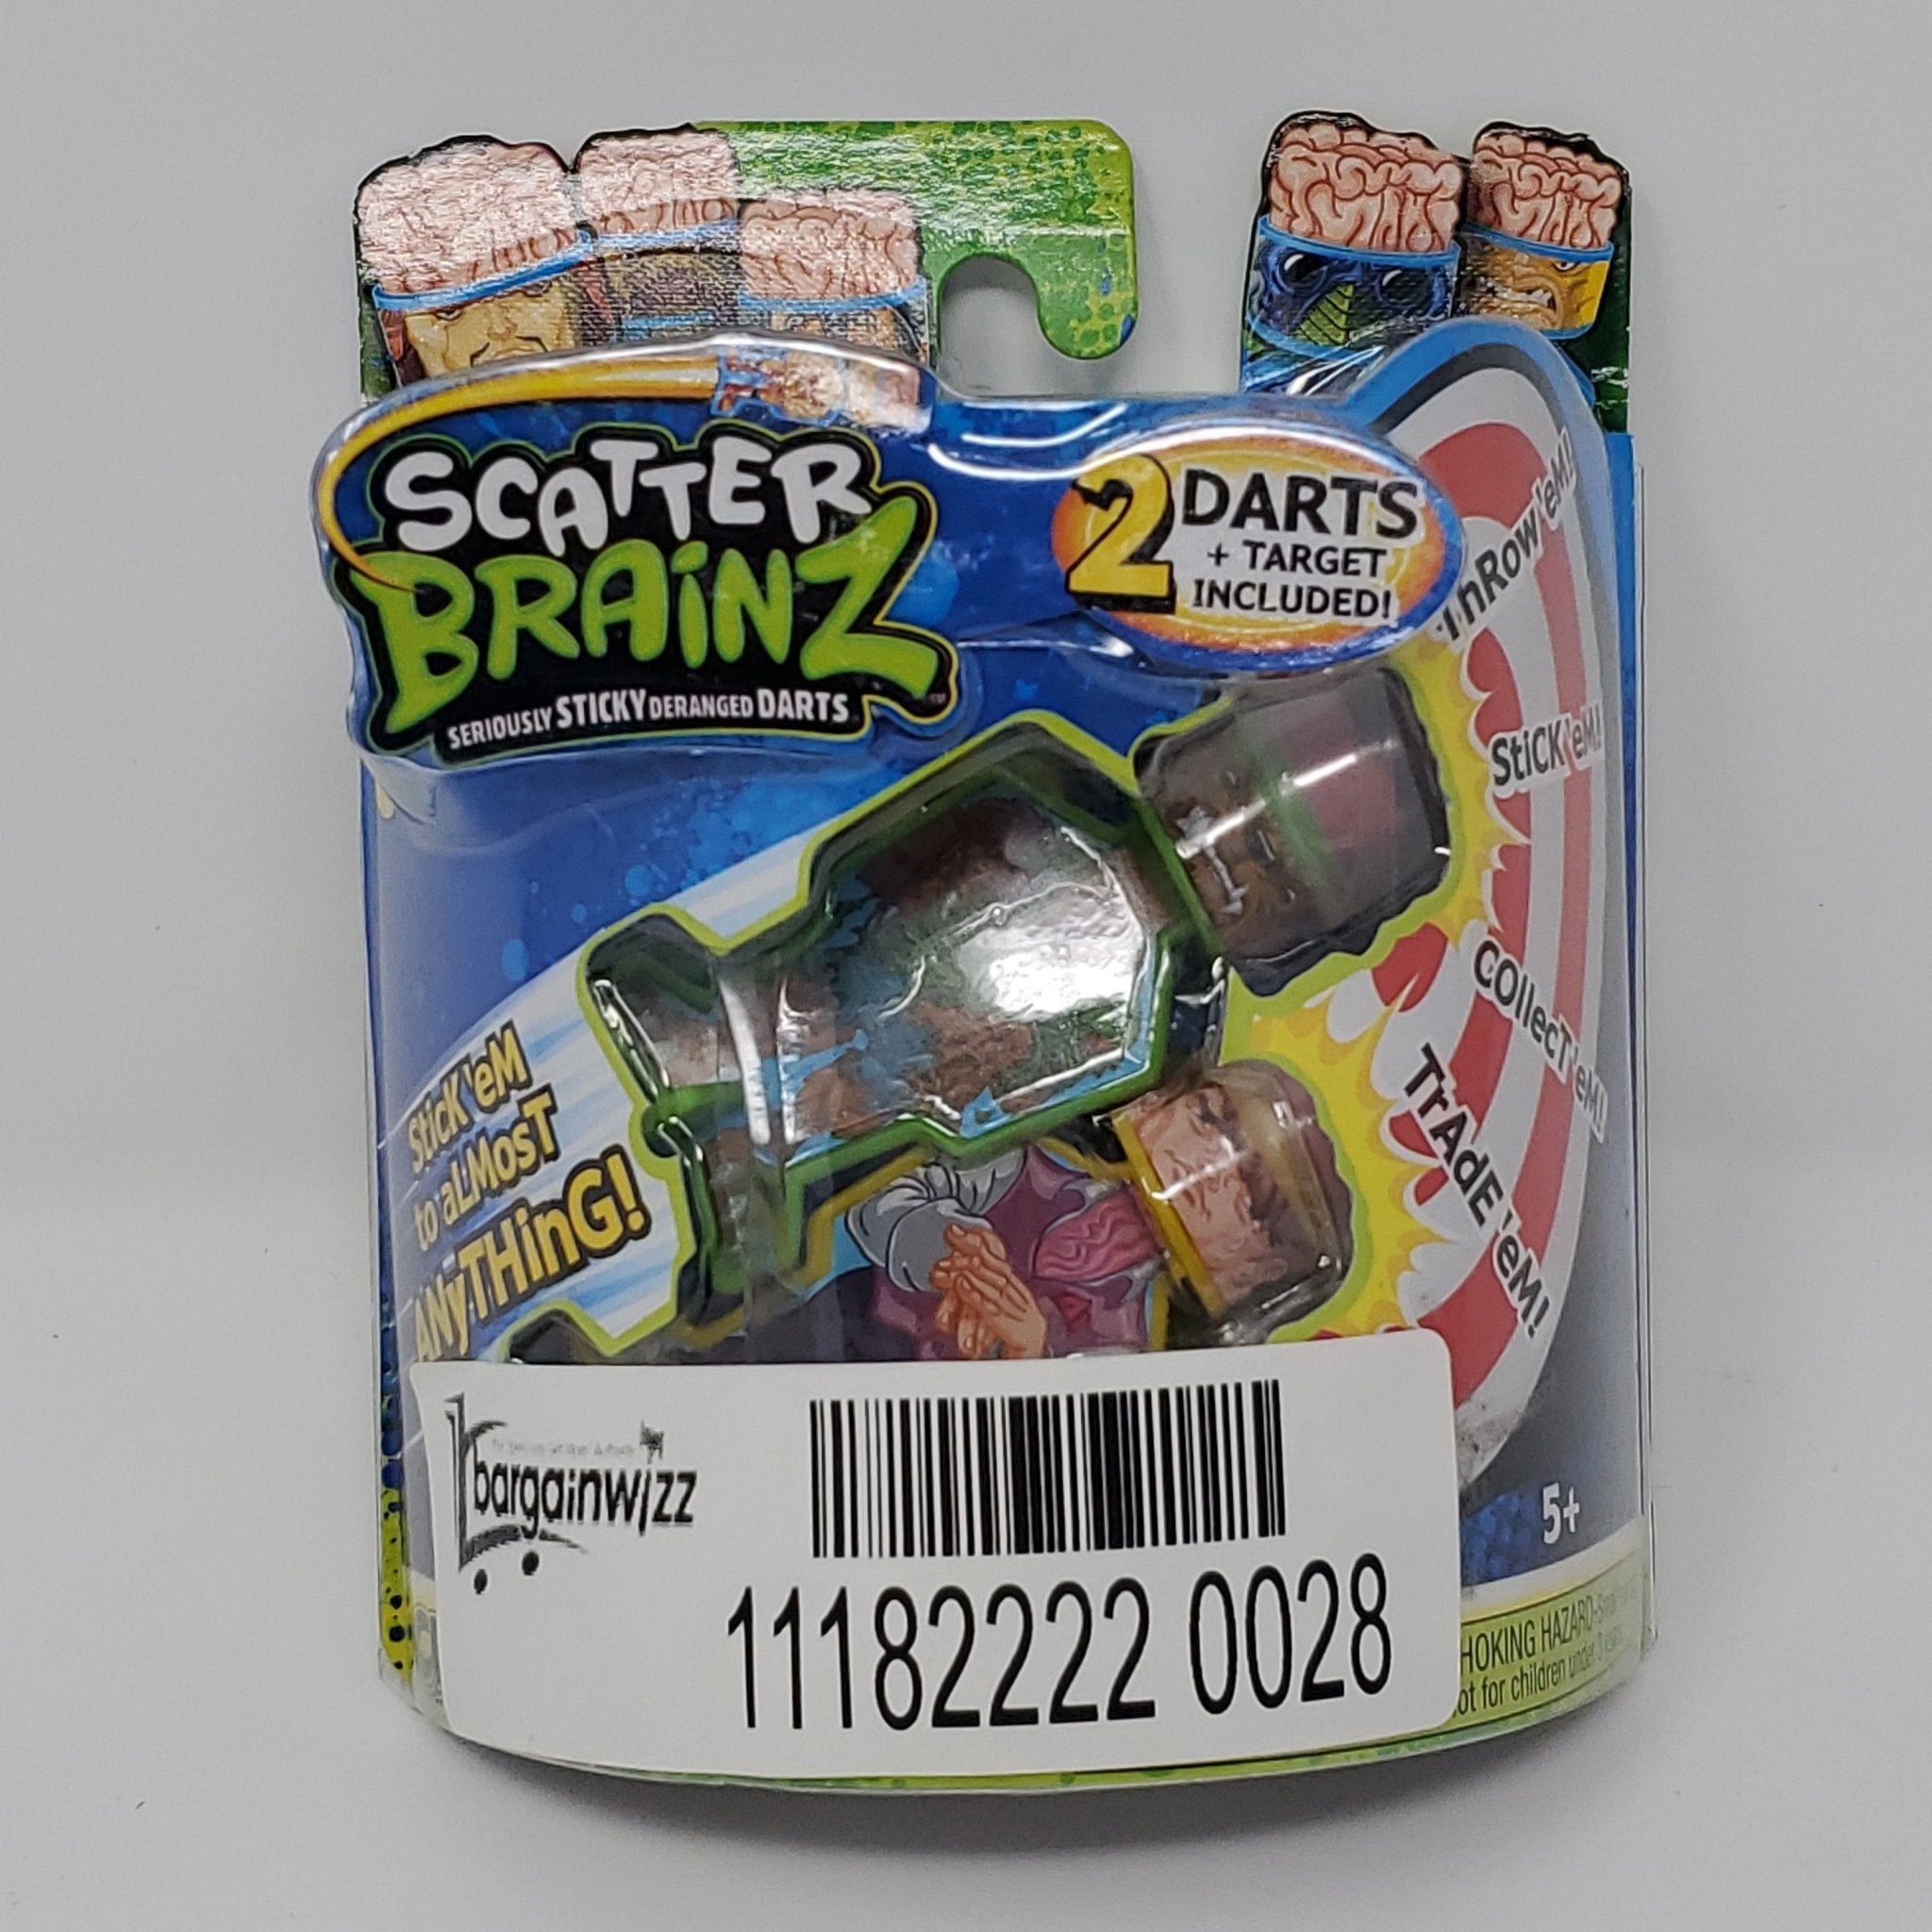 Scatter Brainz Darts 2 Darts With Target Series 1 - Bargainwizz